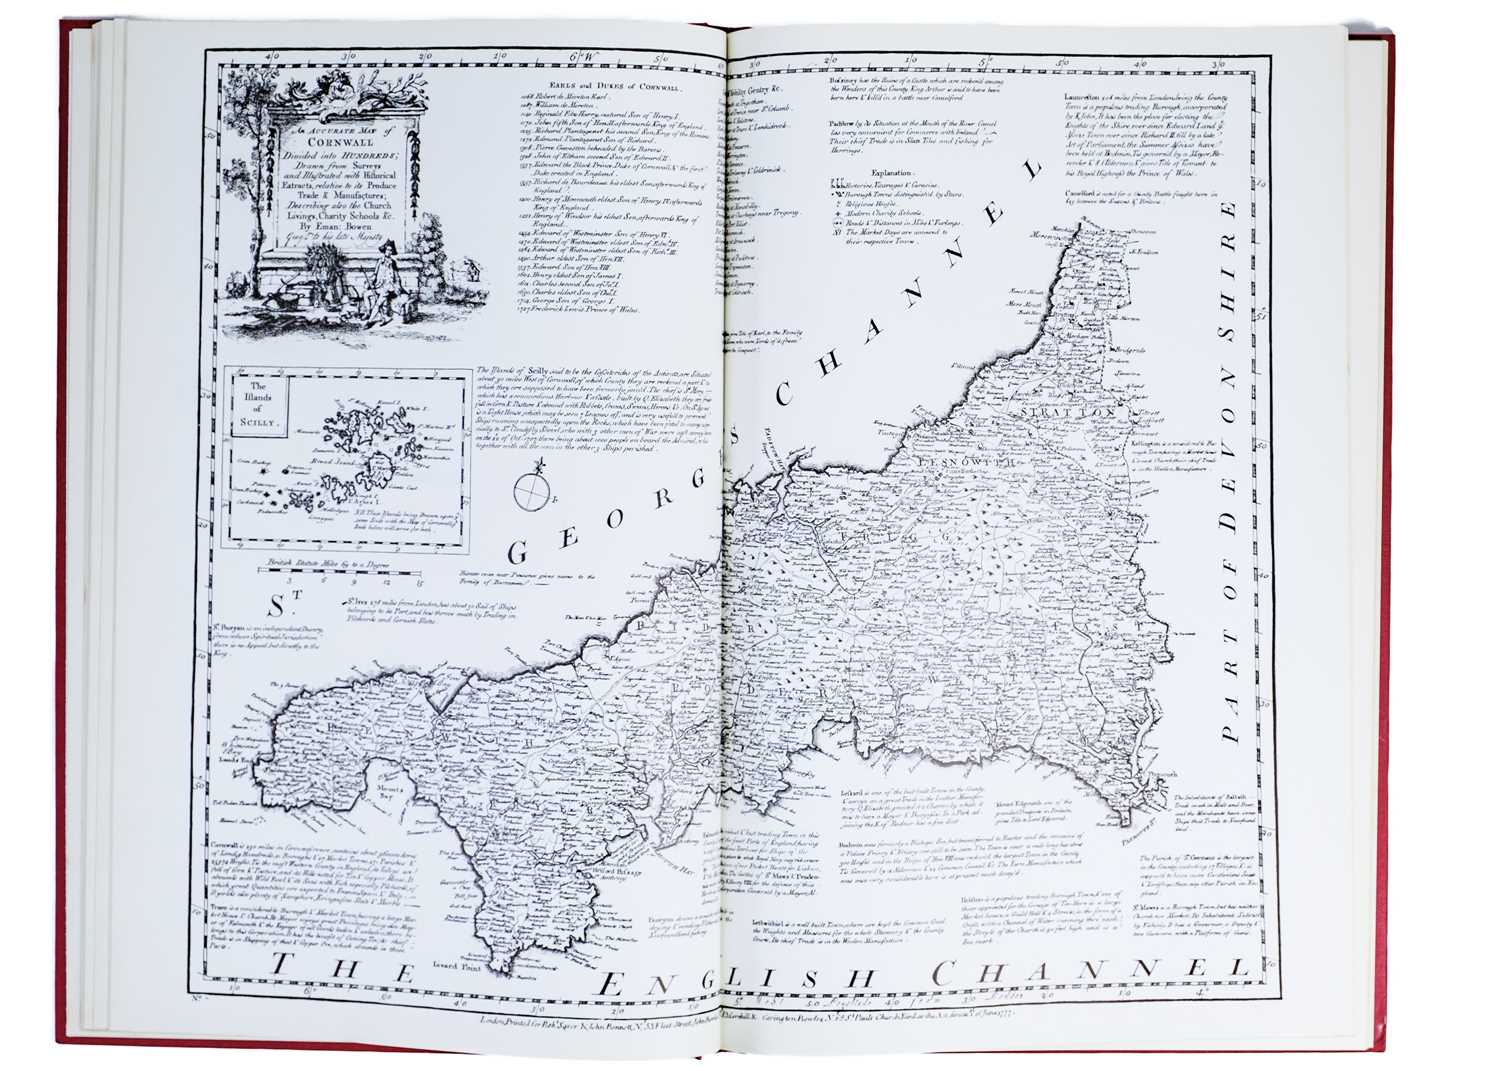 Kitchen, T. and Bowen, E. 'The Royal English Atlas,'